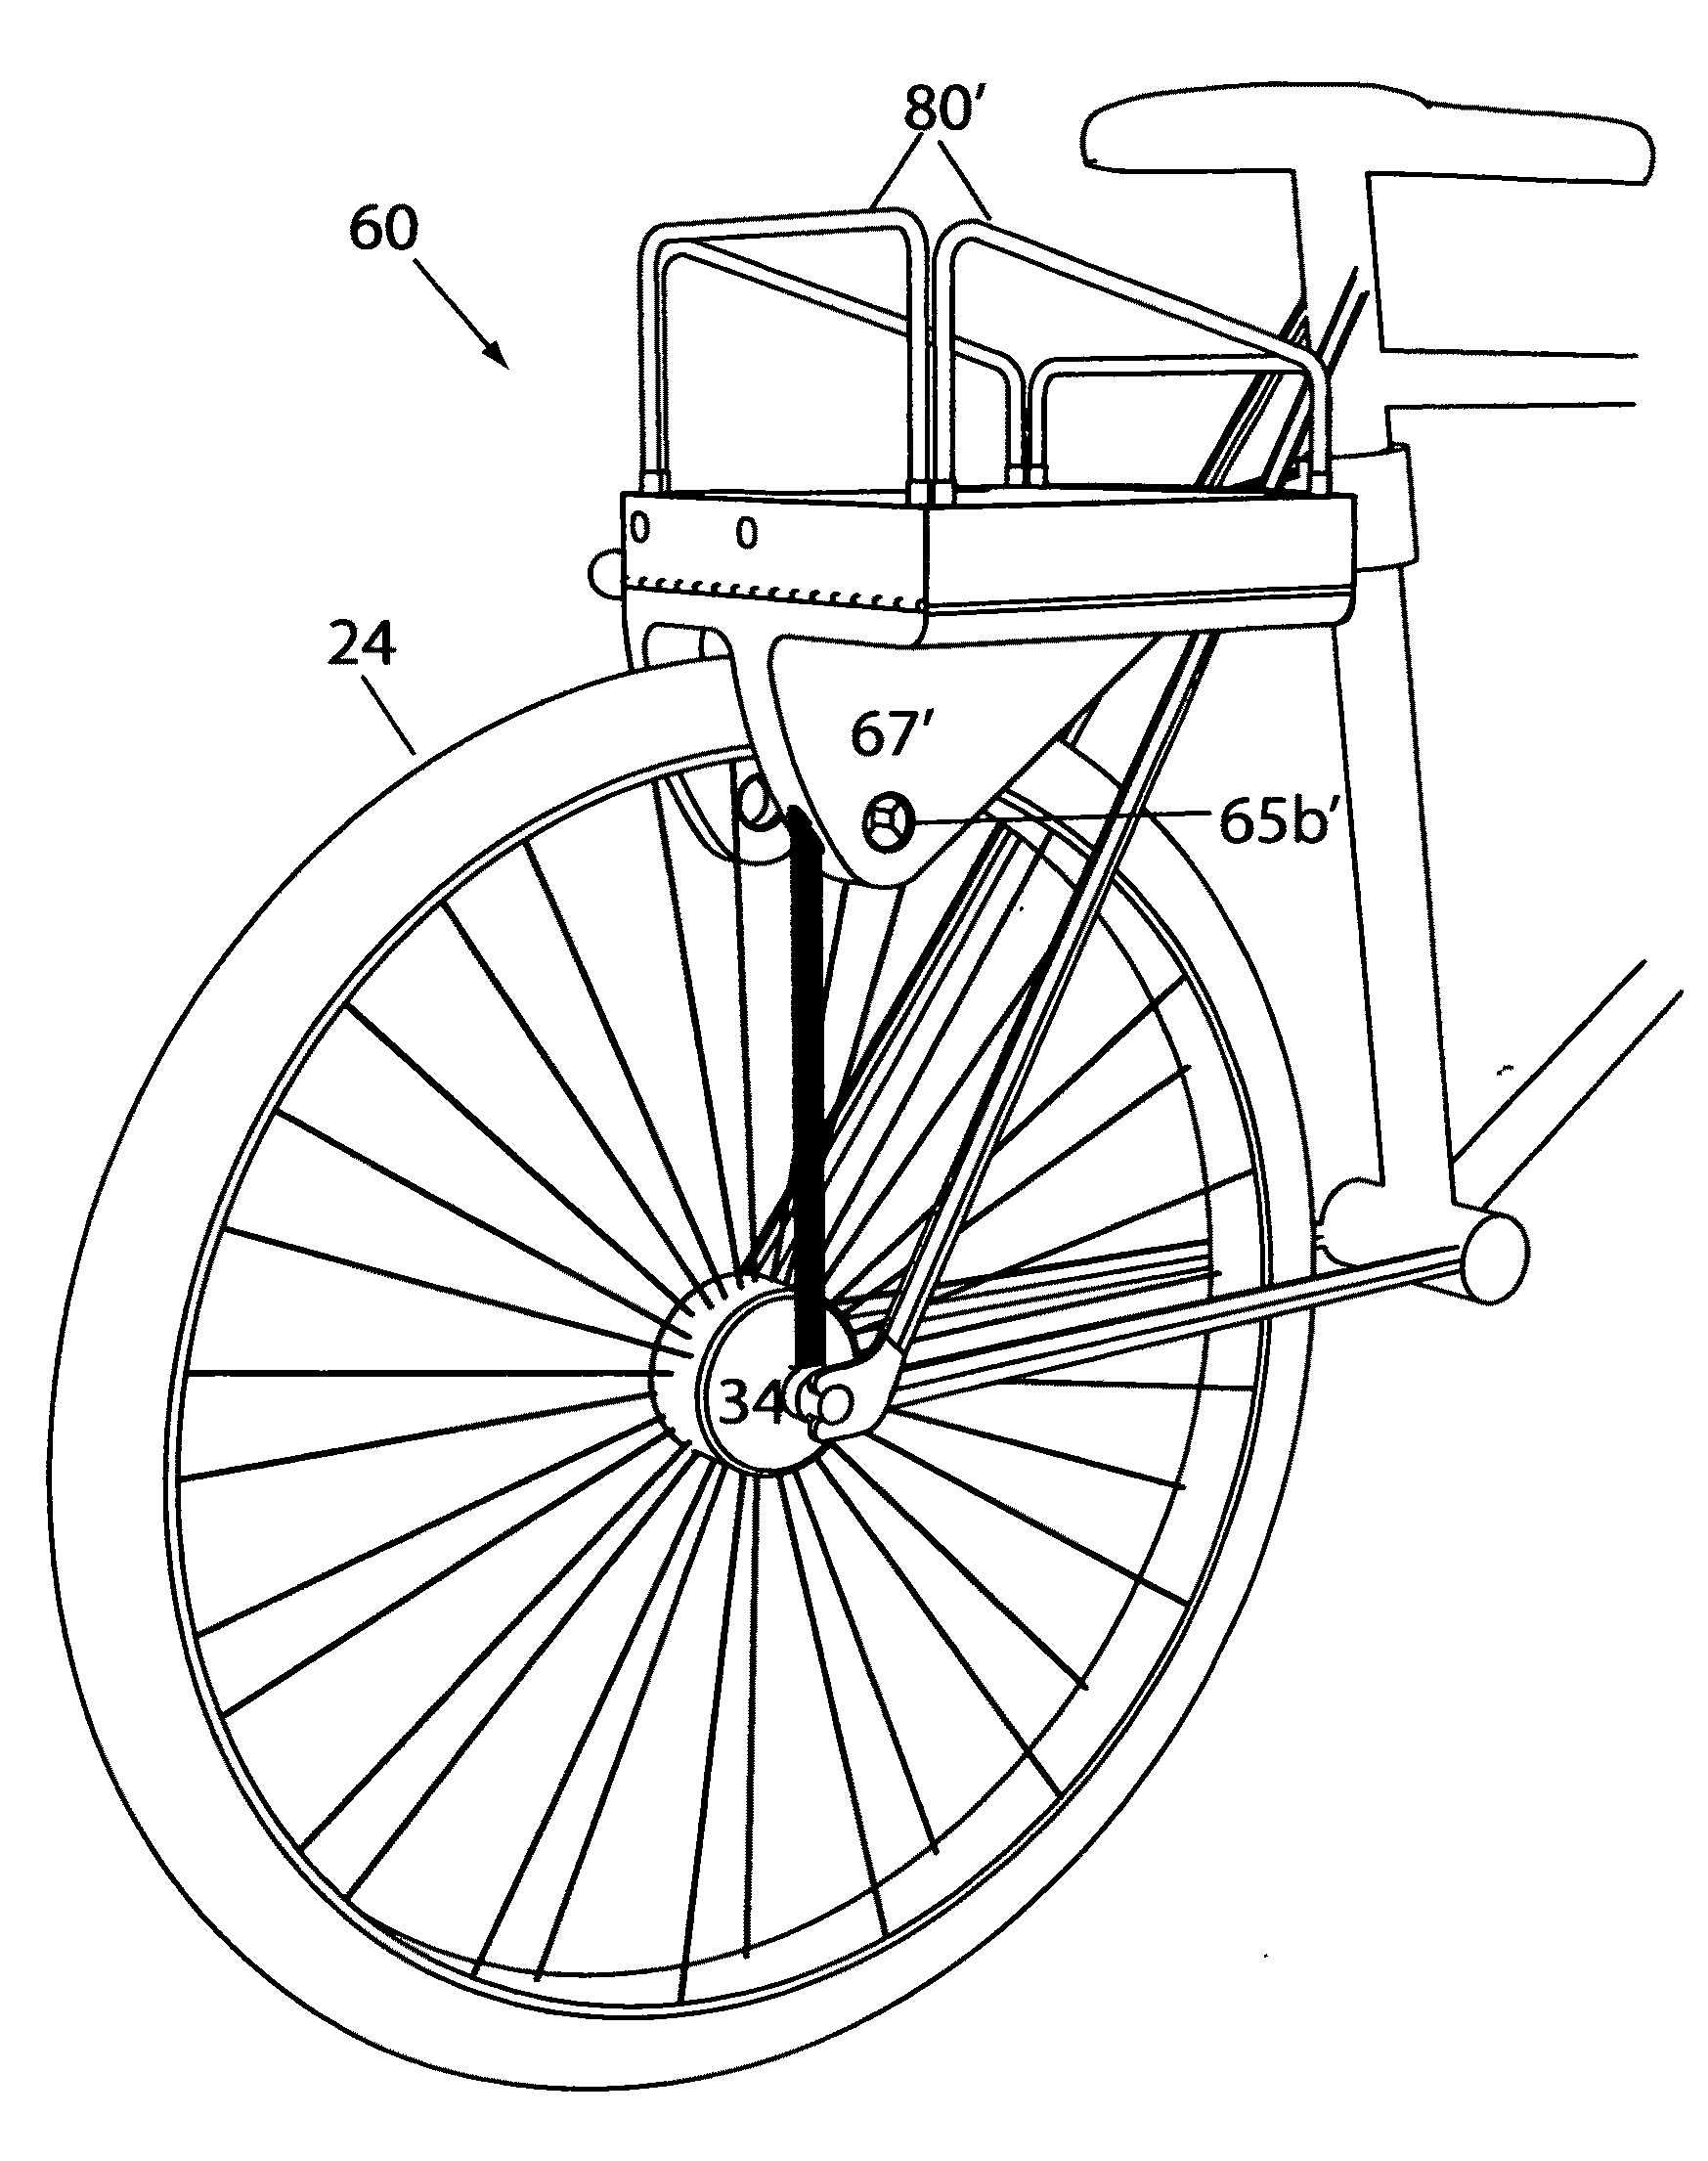 Municipal bicycle sharing system